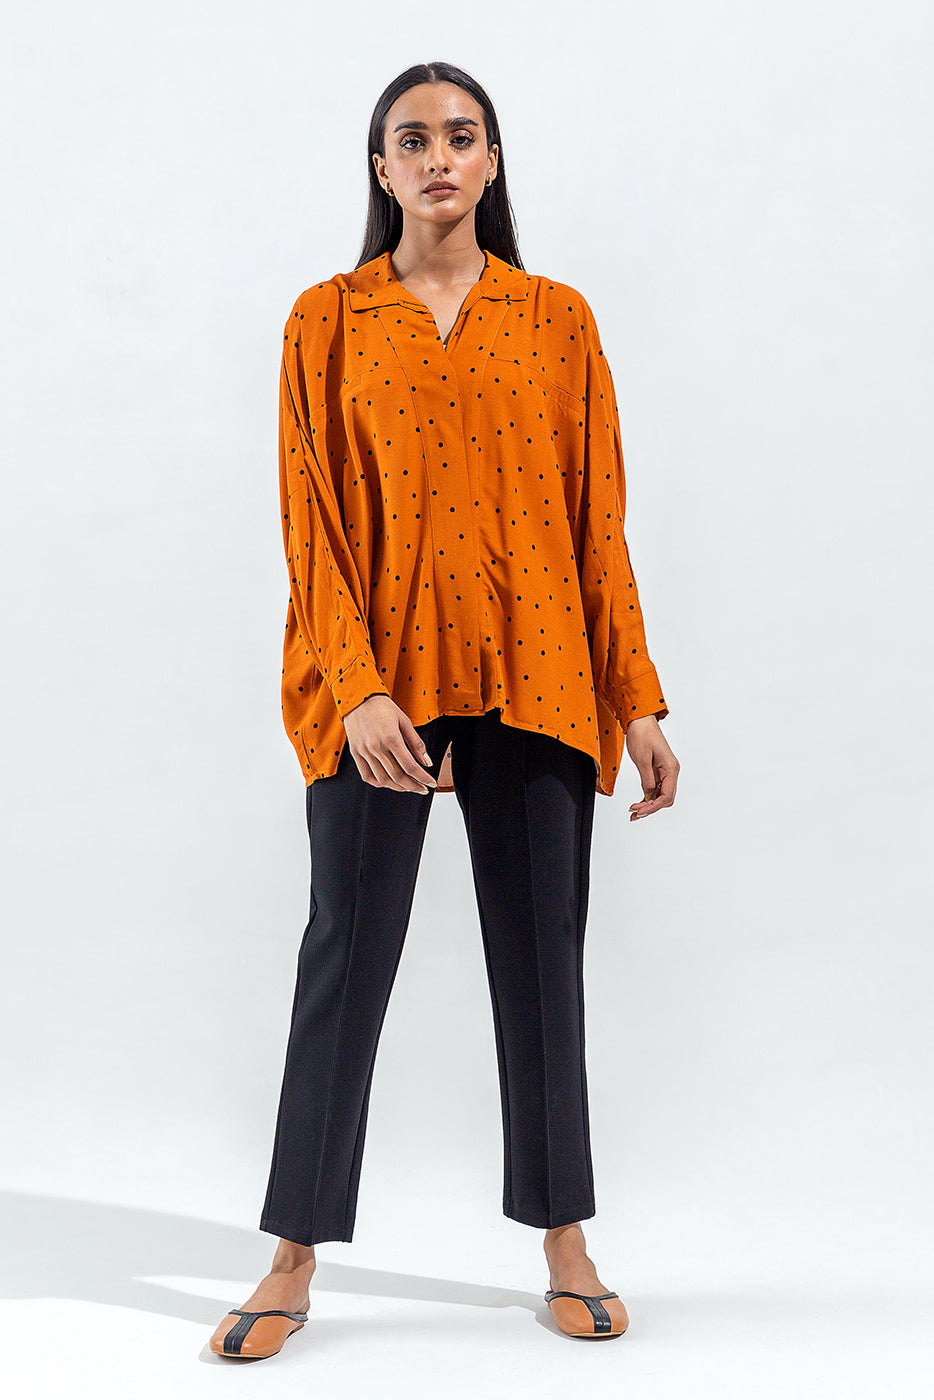 Orange And Black Polka Dot Shirt - BEECHTREE